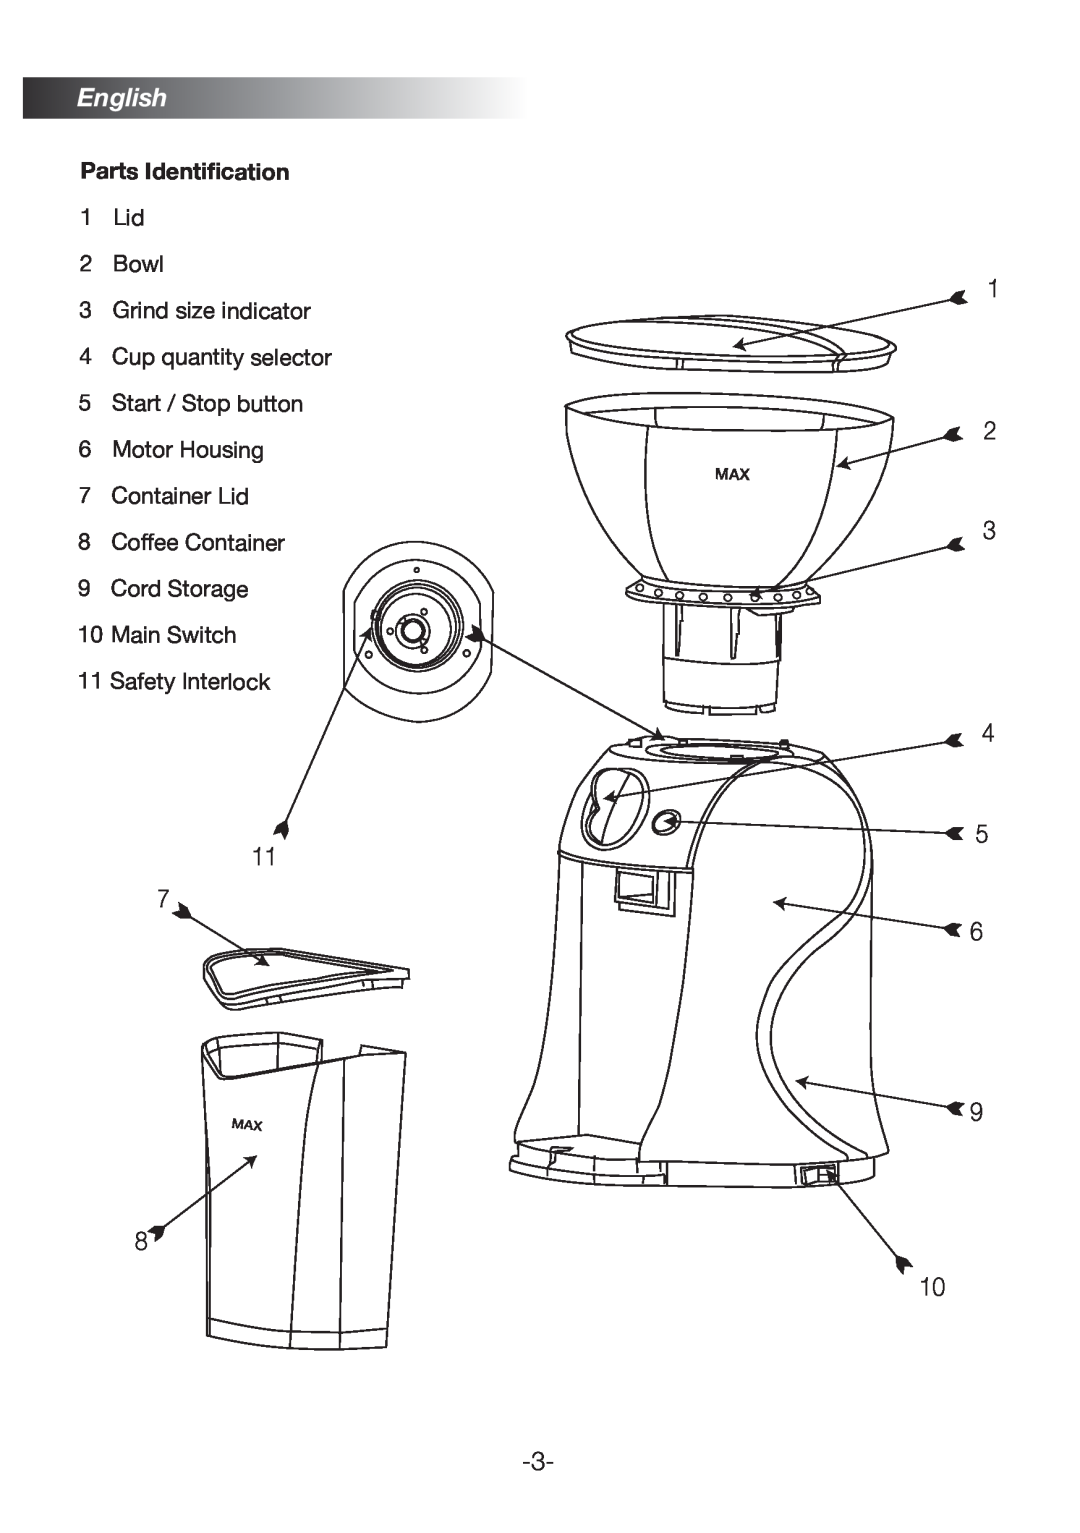 Black & Decker PRCBM5 manual English, Parts Identification, Lid 2 Bowl 3 Grind size indicator 4 Cup quantity selector 